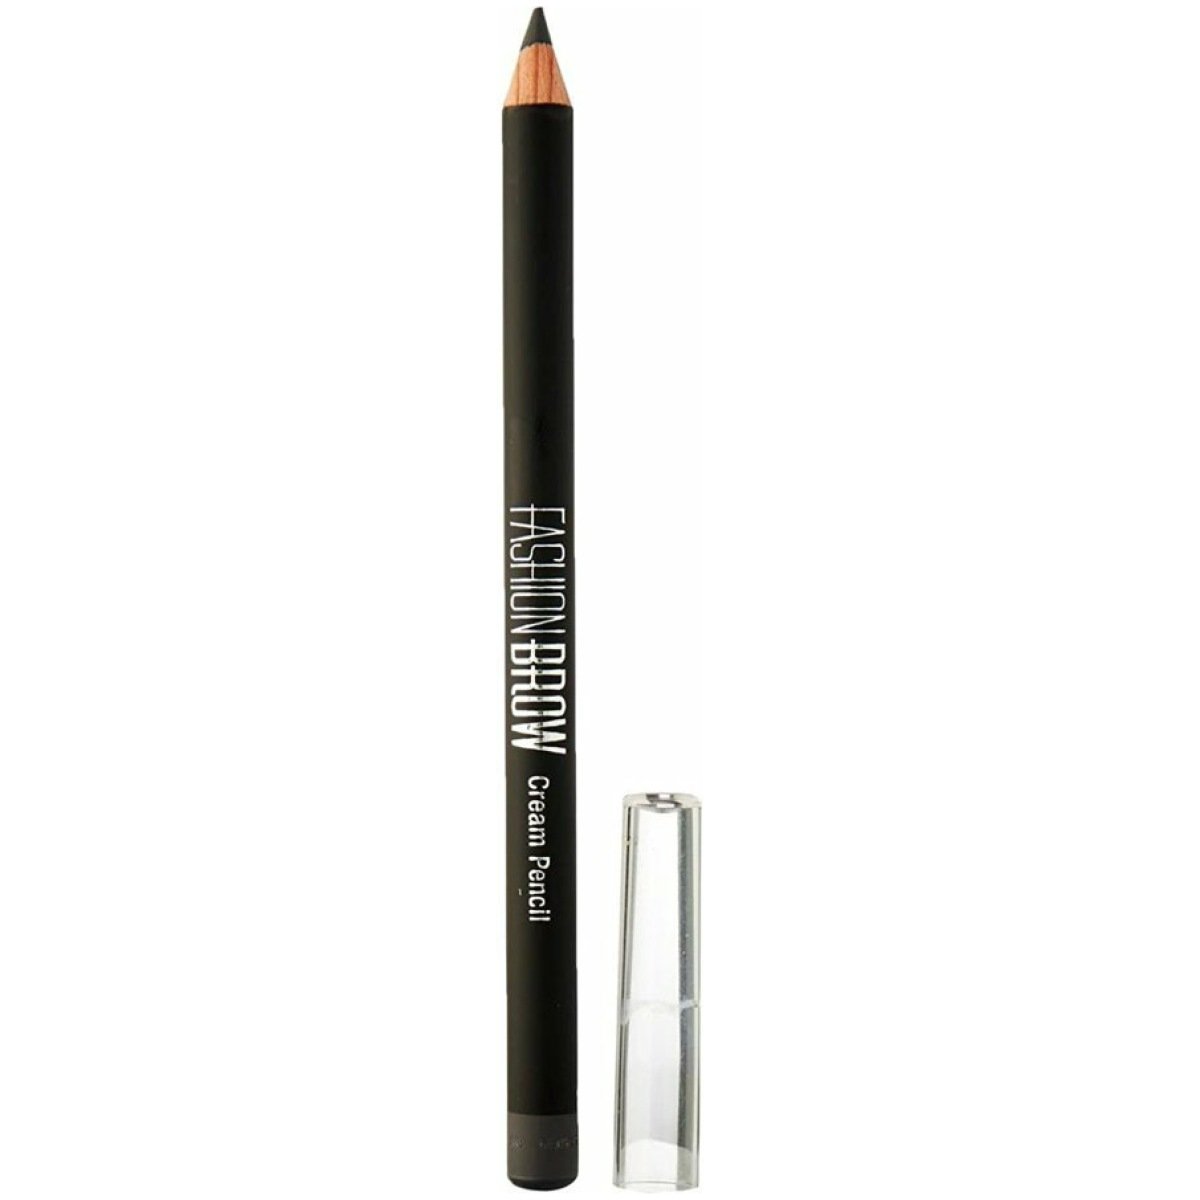 Maybelline New York Fashion Brow Cream Pencil, Gray, 0.78g